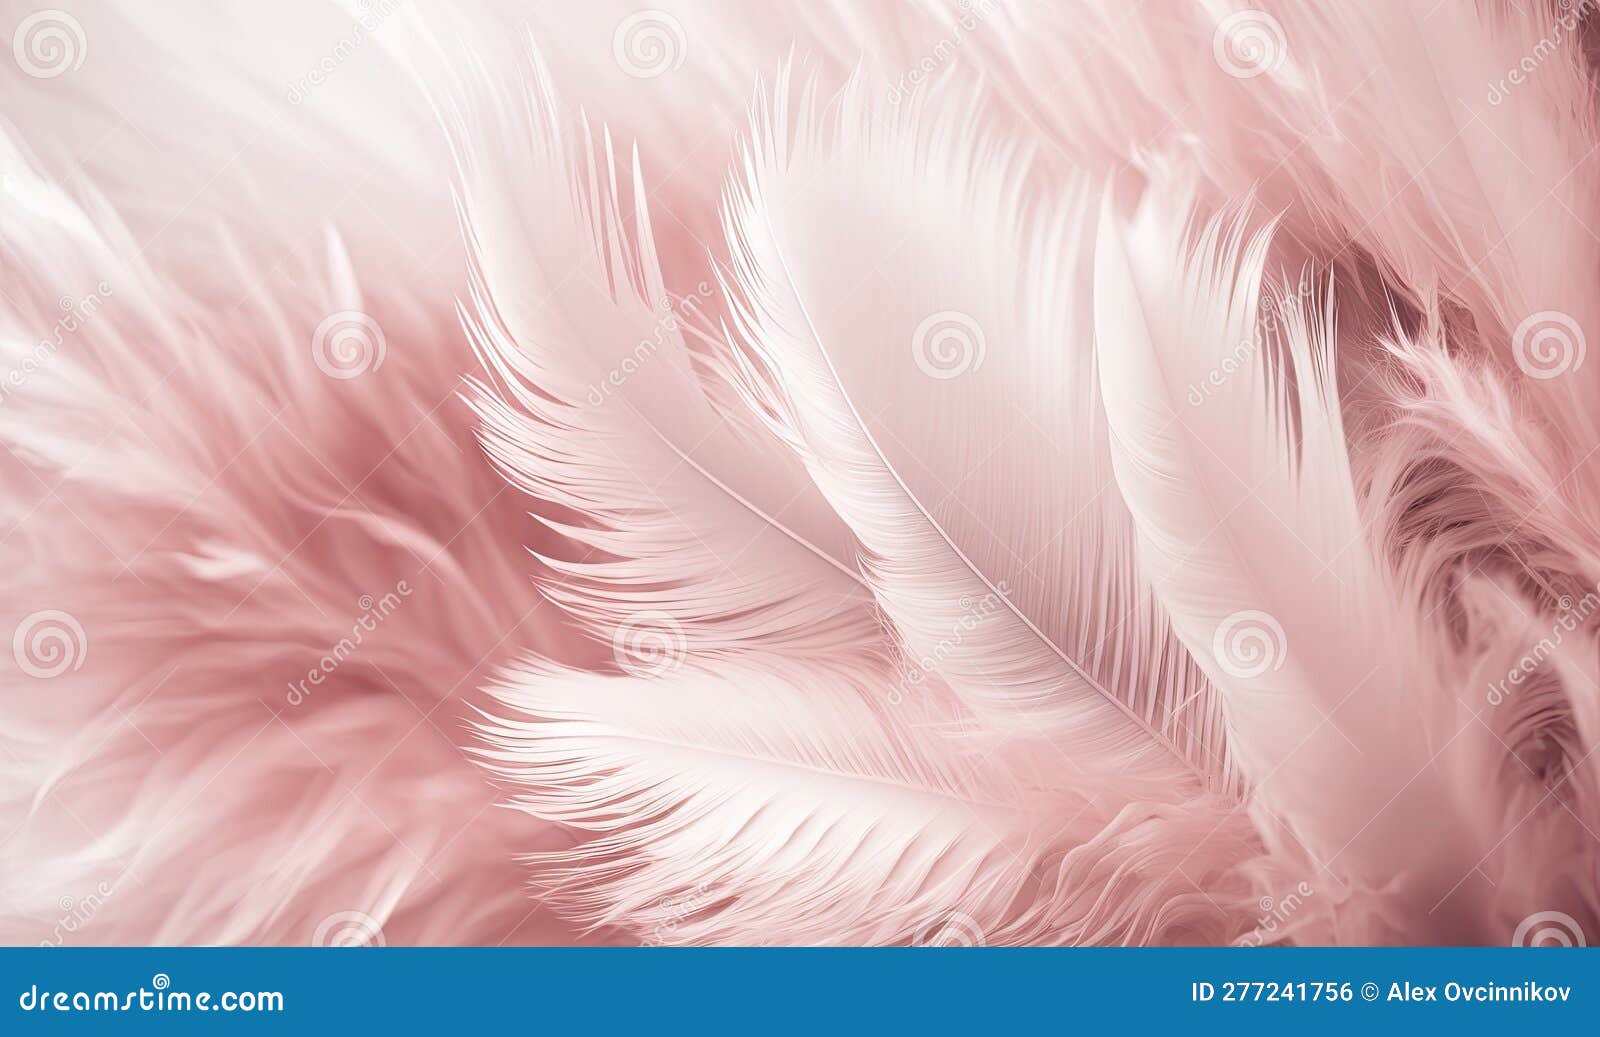 Fondo De Textura De Plumas De Color Rosa Suave Para Diseños Oníricos. Stock  de ilustración - Ilustración de profesional, plumas: 277241756